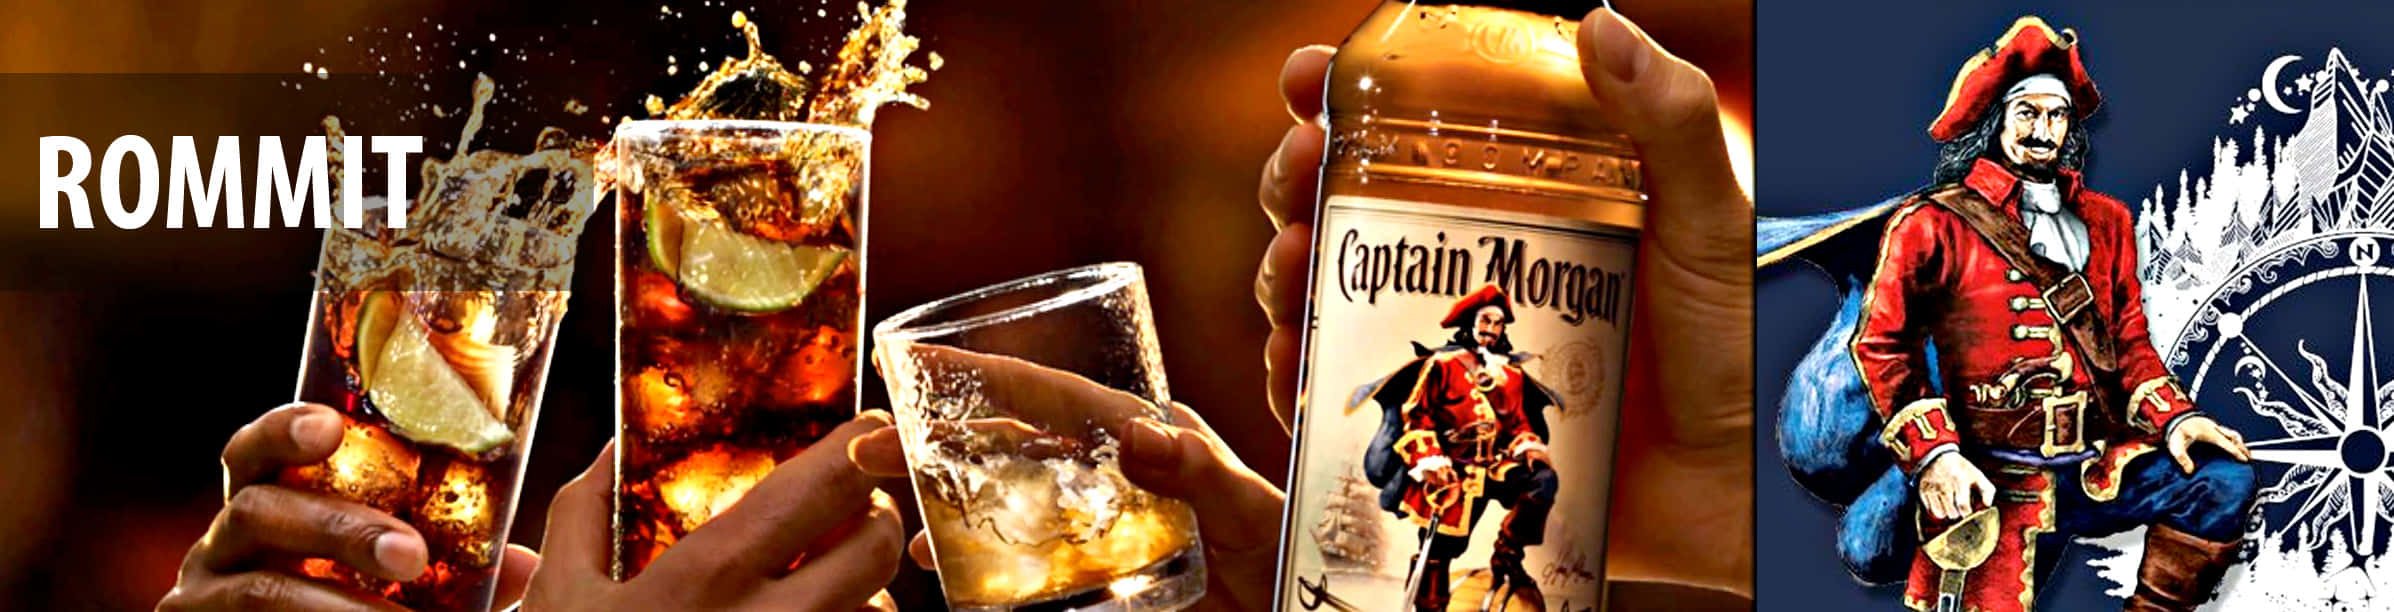 Captain Morgan Rum Celebration Banner Wallpaper